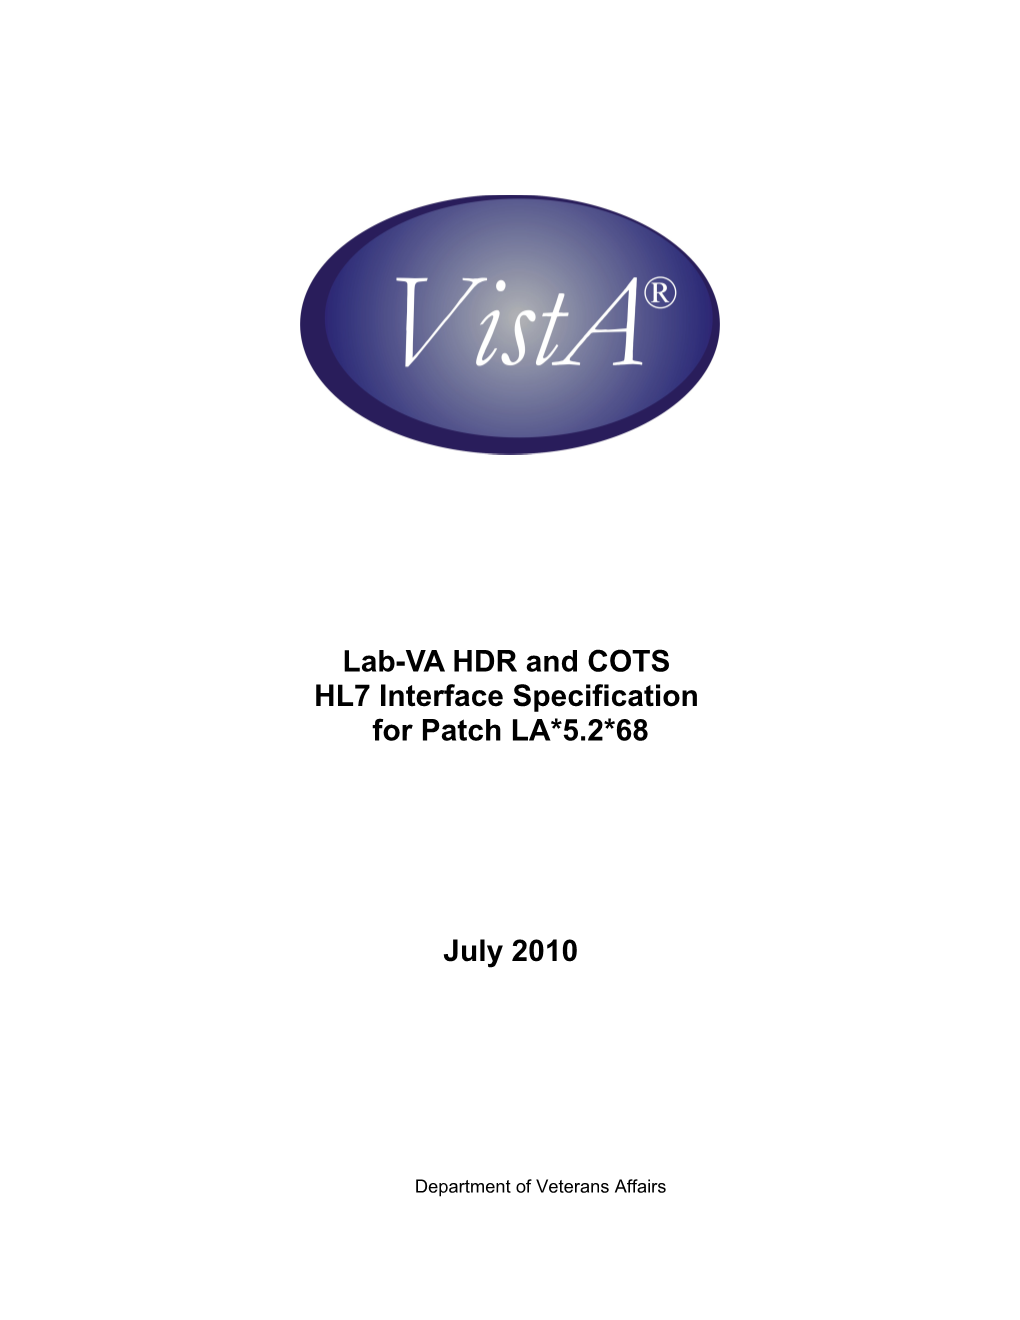 Laboratory VA HDR/HL7 Interface Specification